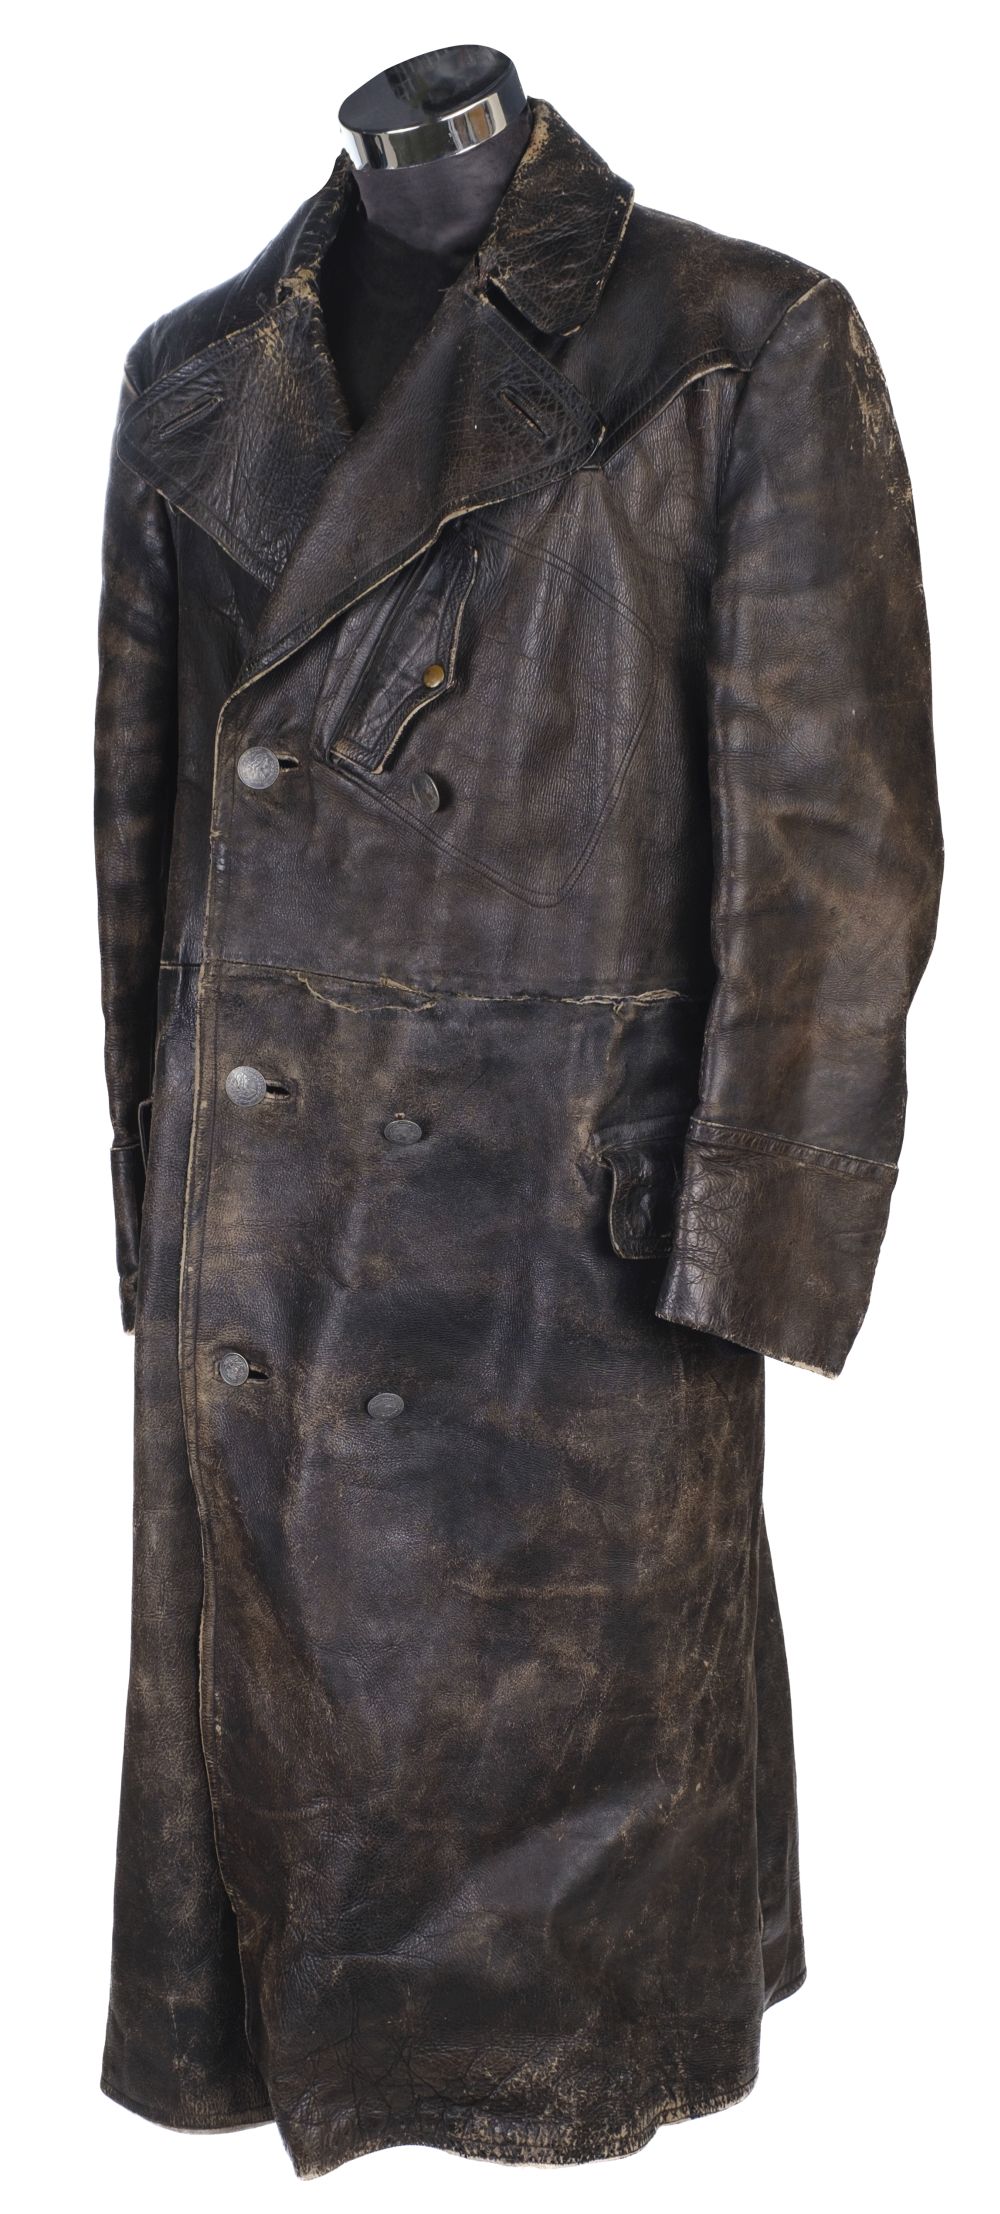 Flying Jacket. German black leather flying jacket, early 20th century